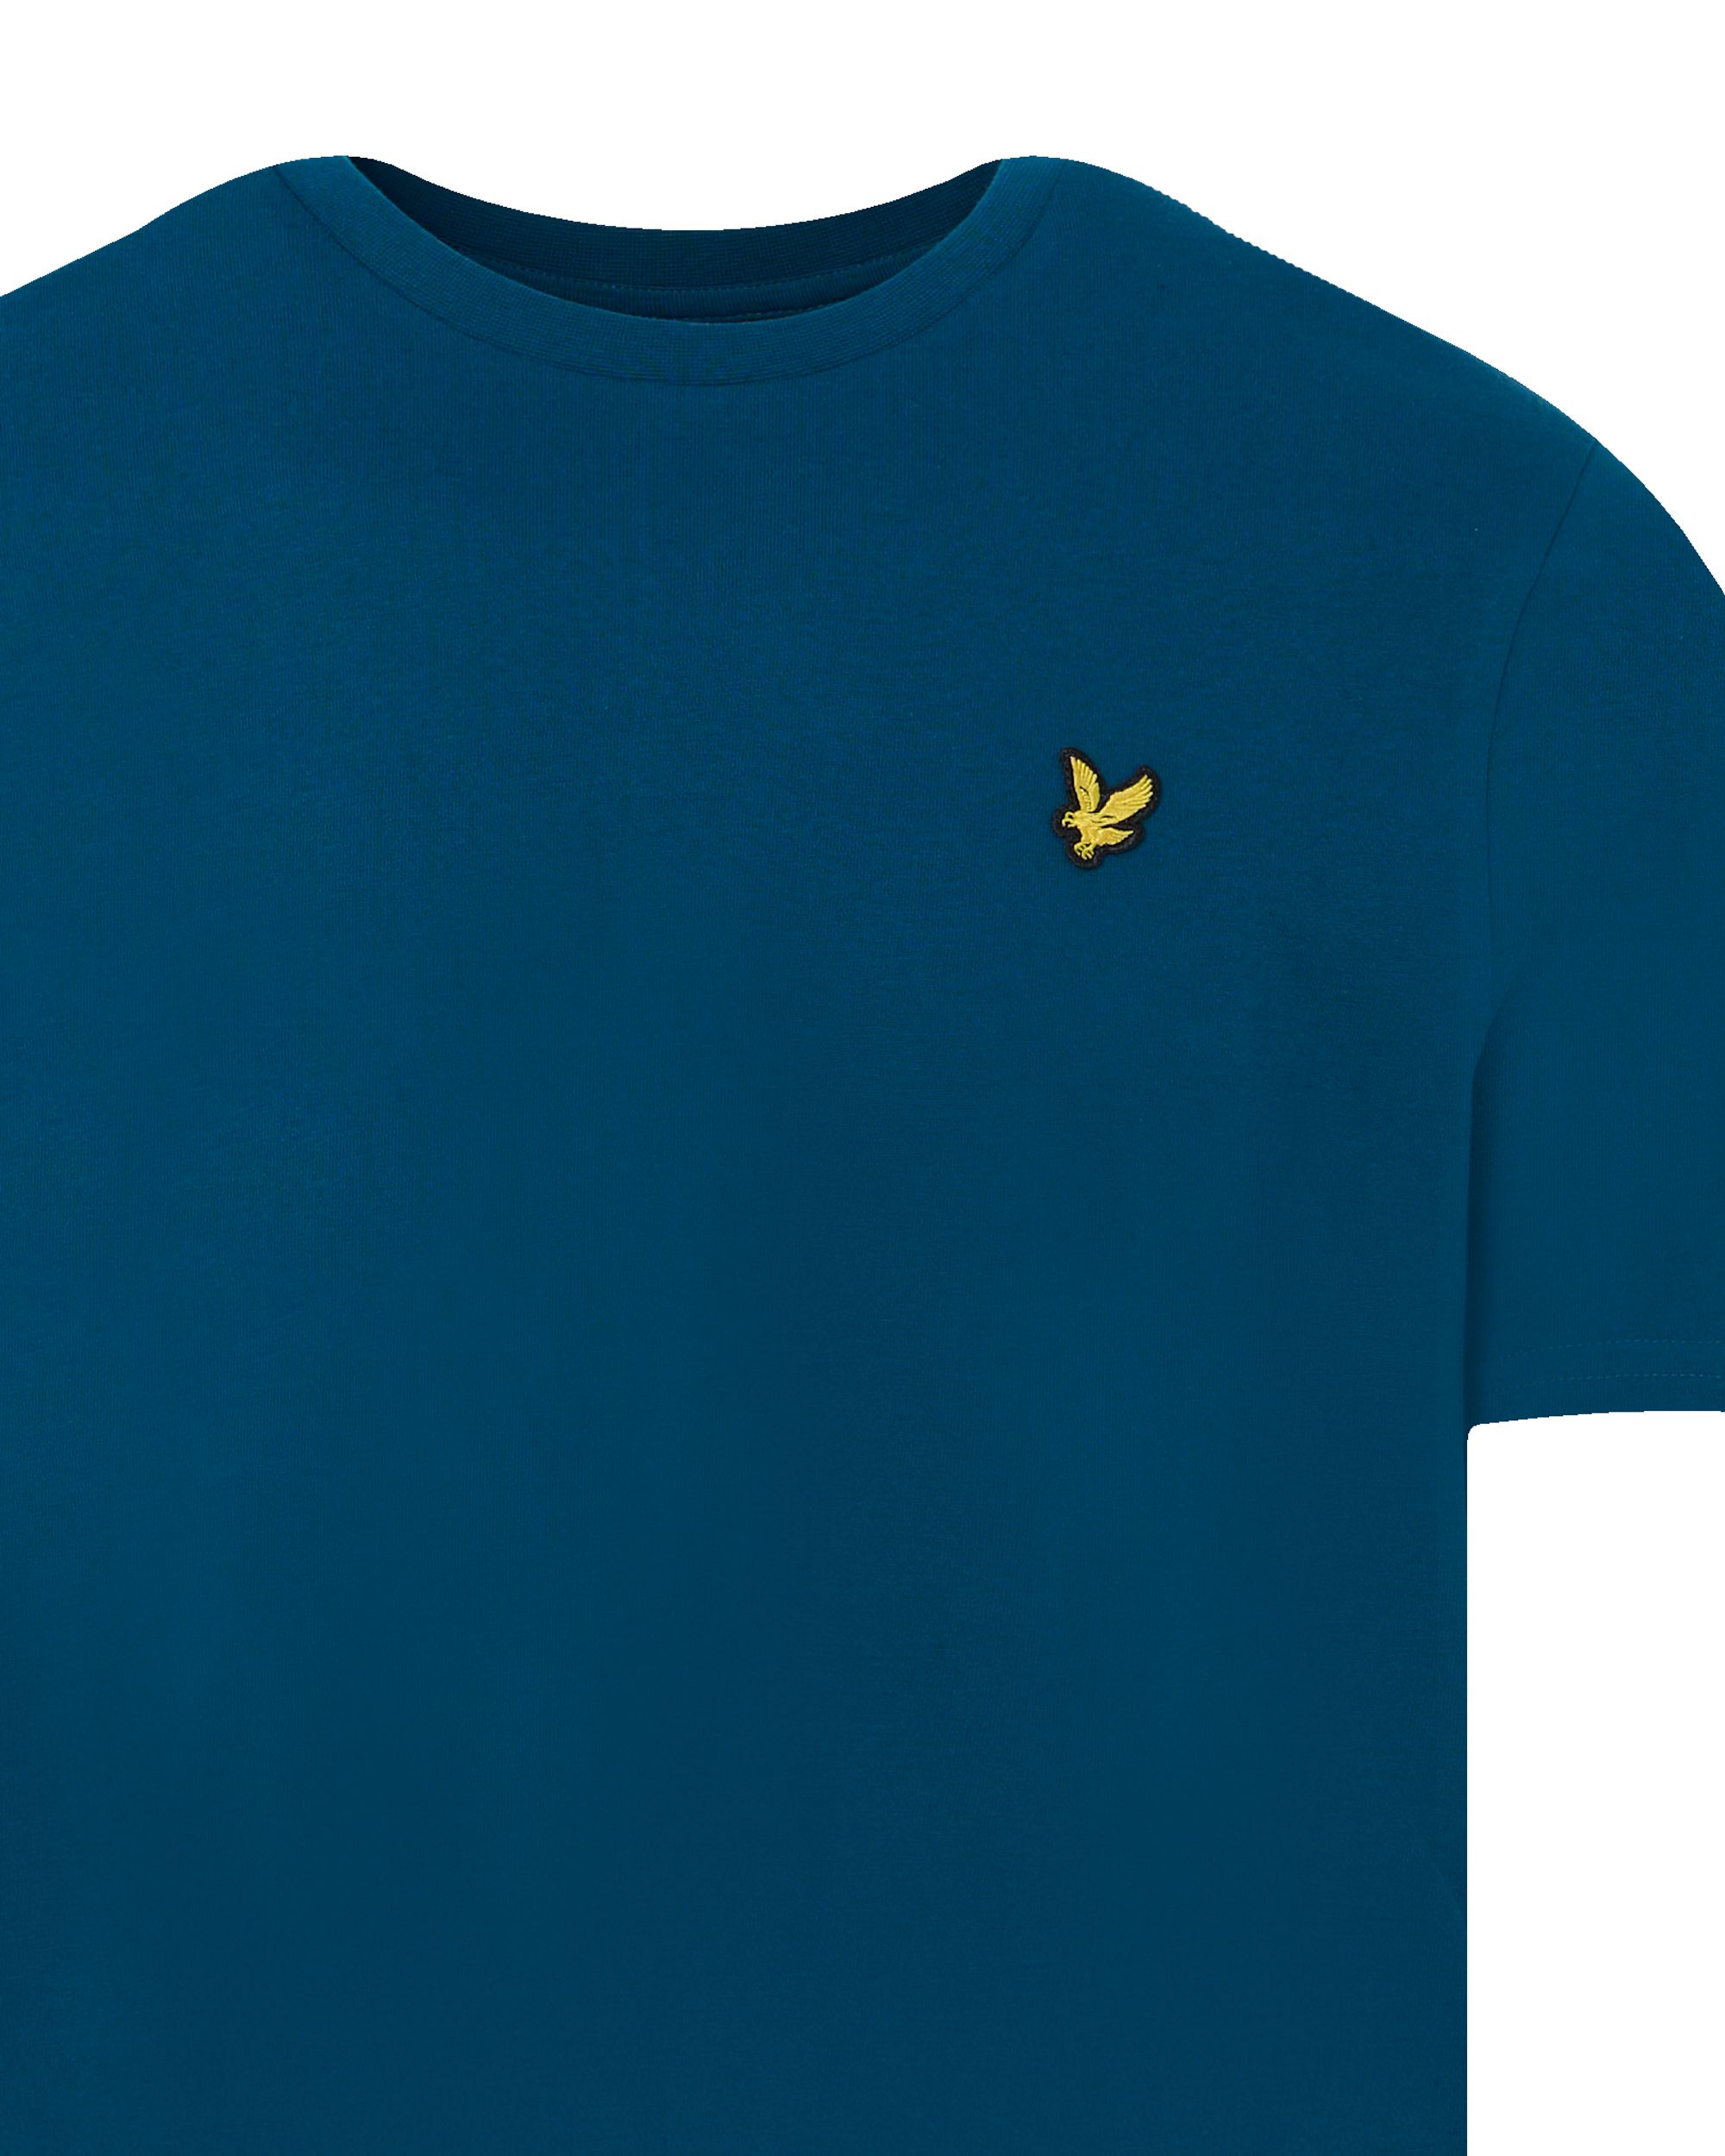 Lyle & Scott T-shirt KM Donker blauw 092271-002-L